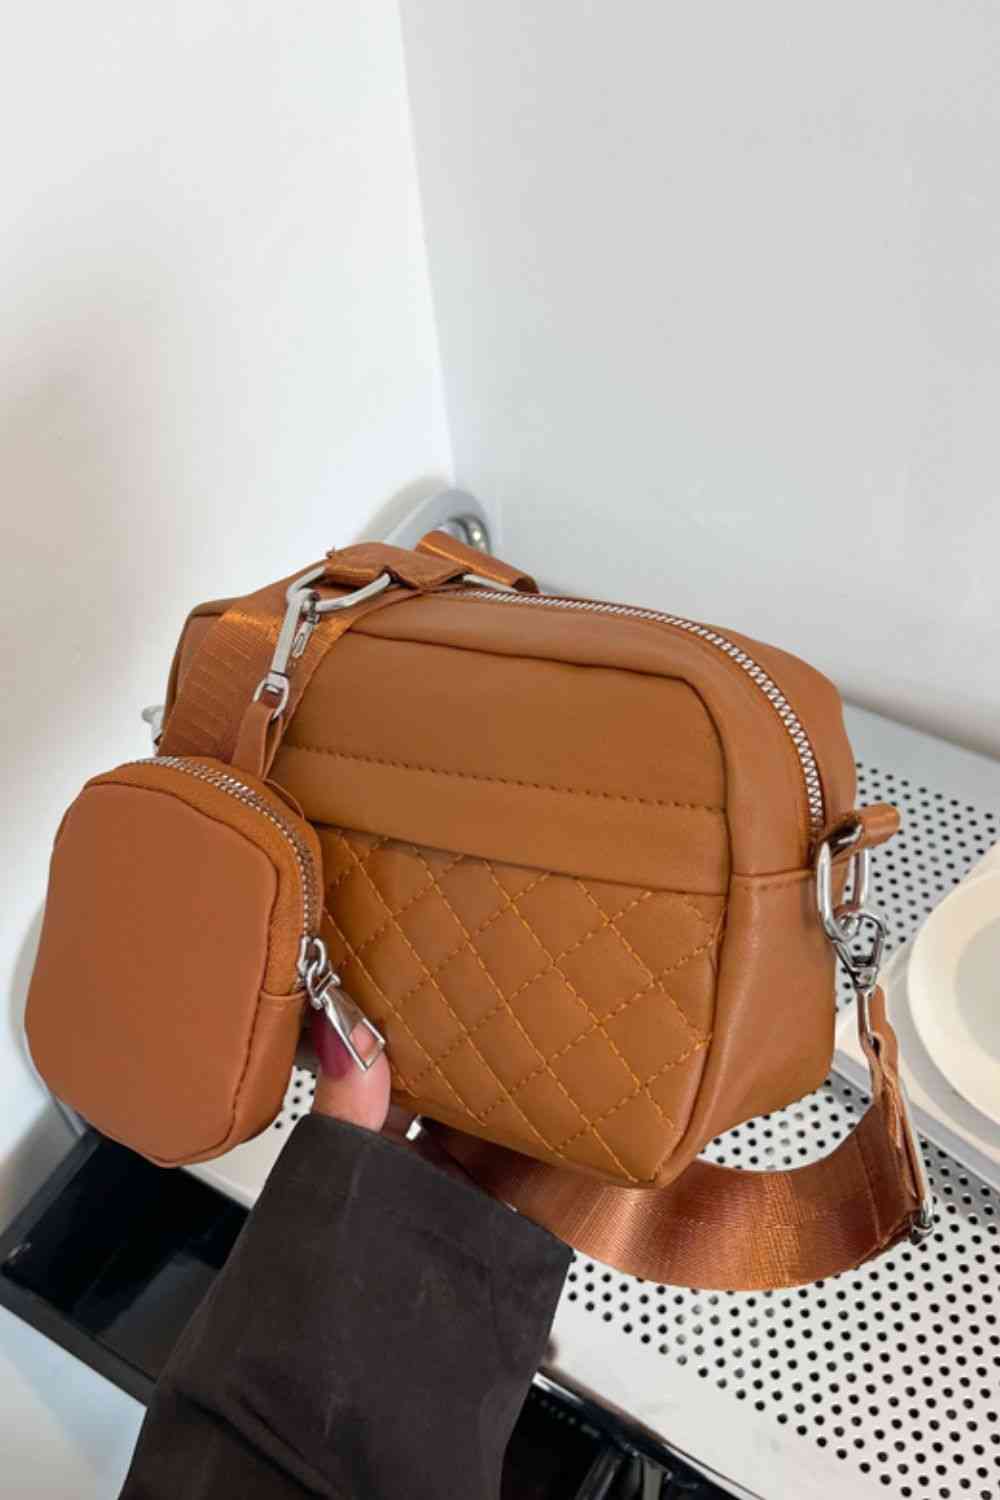 TEEK - AdoringShoulder Bag with Small Purse BAG TEEK Trend Caramel  